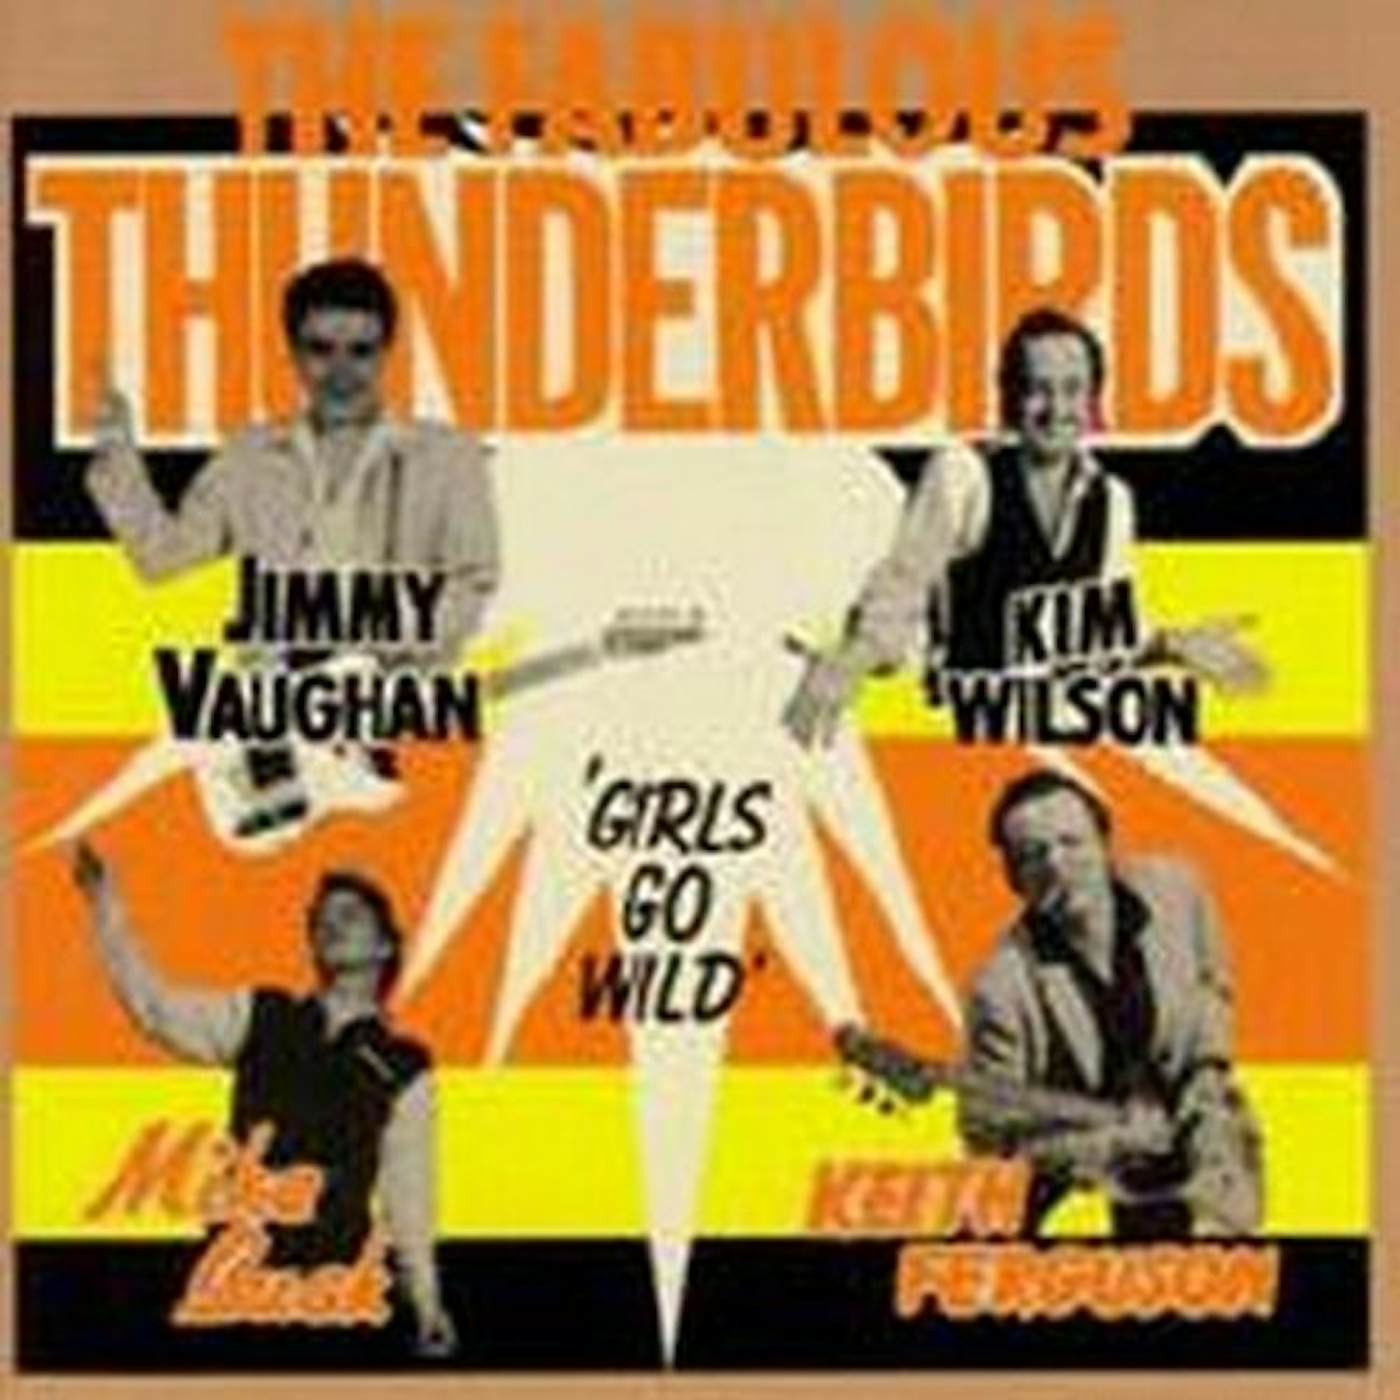 The Fabulous Thunderbirds GIRLS GO WILD CD